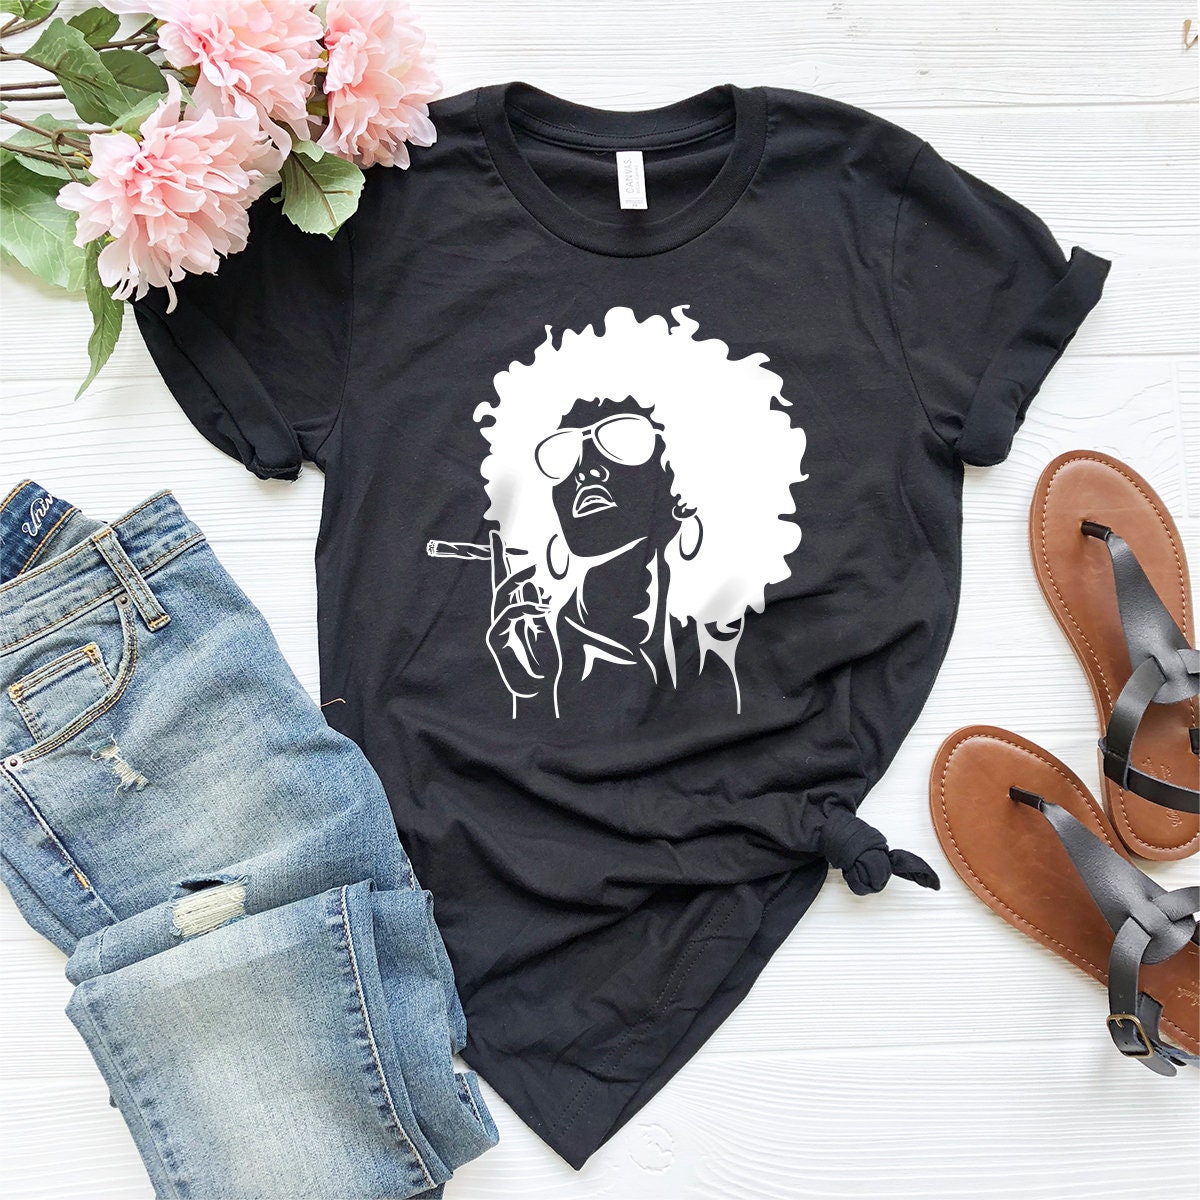 Marijuana Shirt, Weed Shirt, Afro Girl Shirt, Weed Tee, Afro Girl Smoking Shirt, Black Women Weed shirt, 420-Weed Shirt - Fastdeliverytees.com